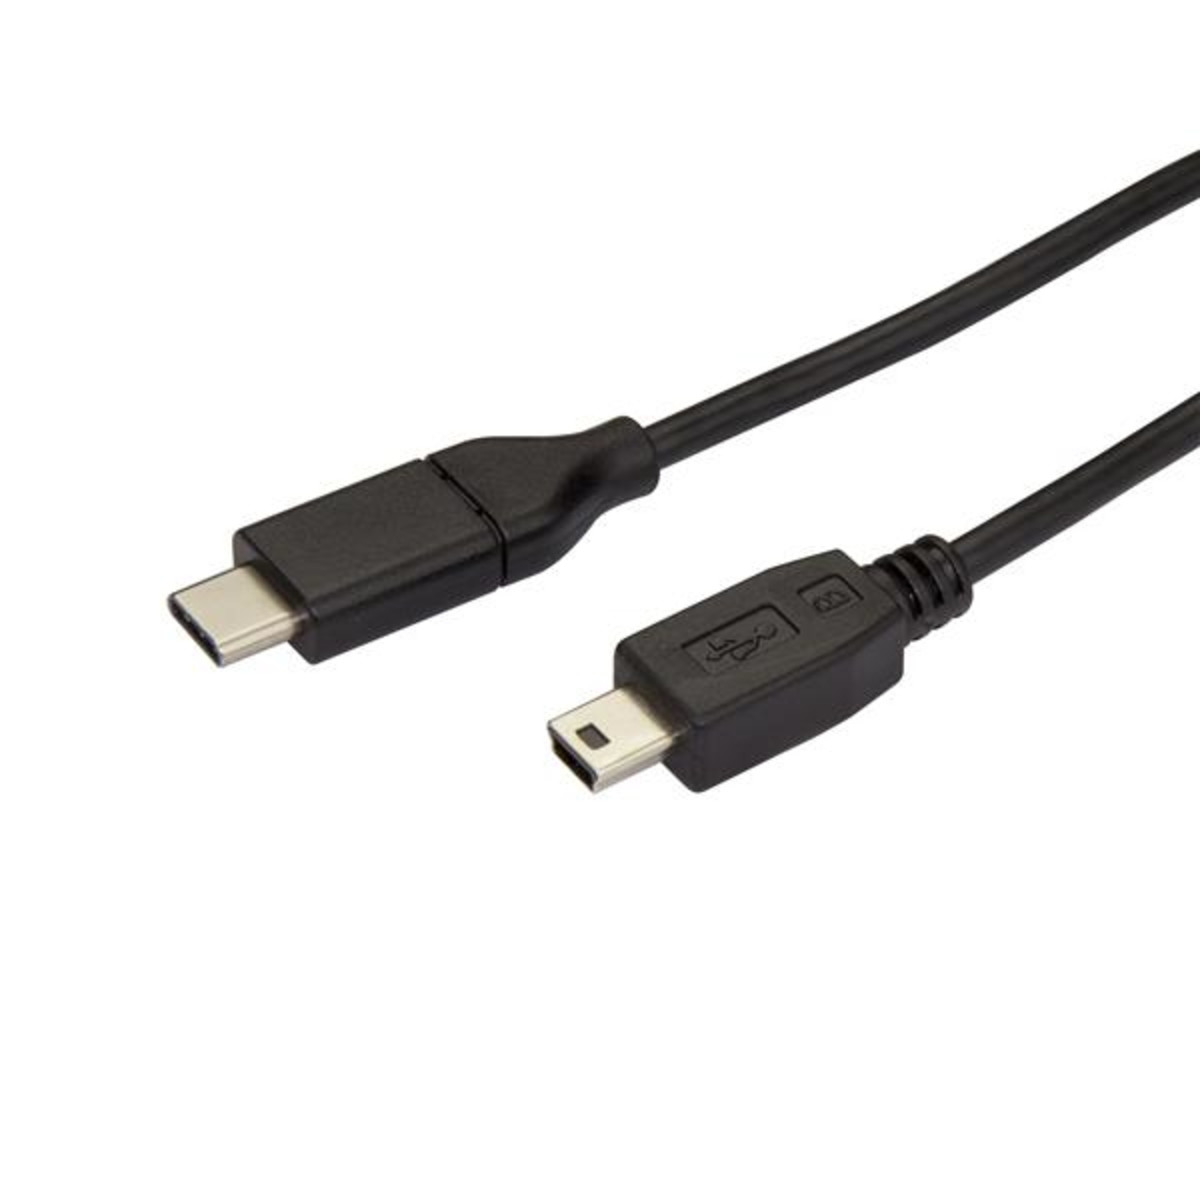 2m USB C to Mini USB Cable M/M - USB 2.0